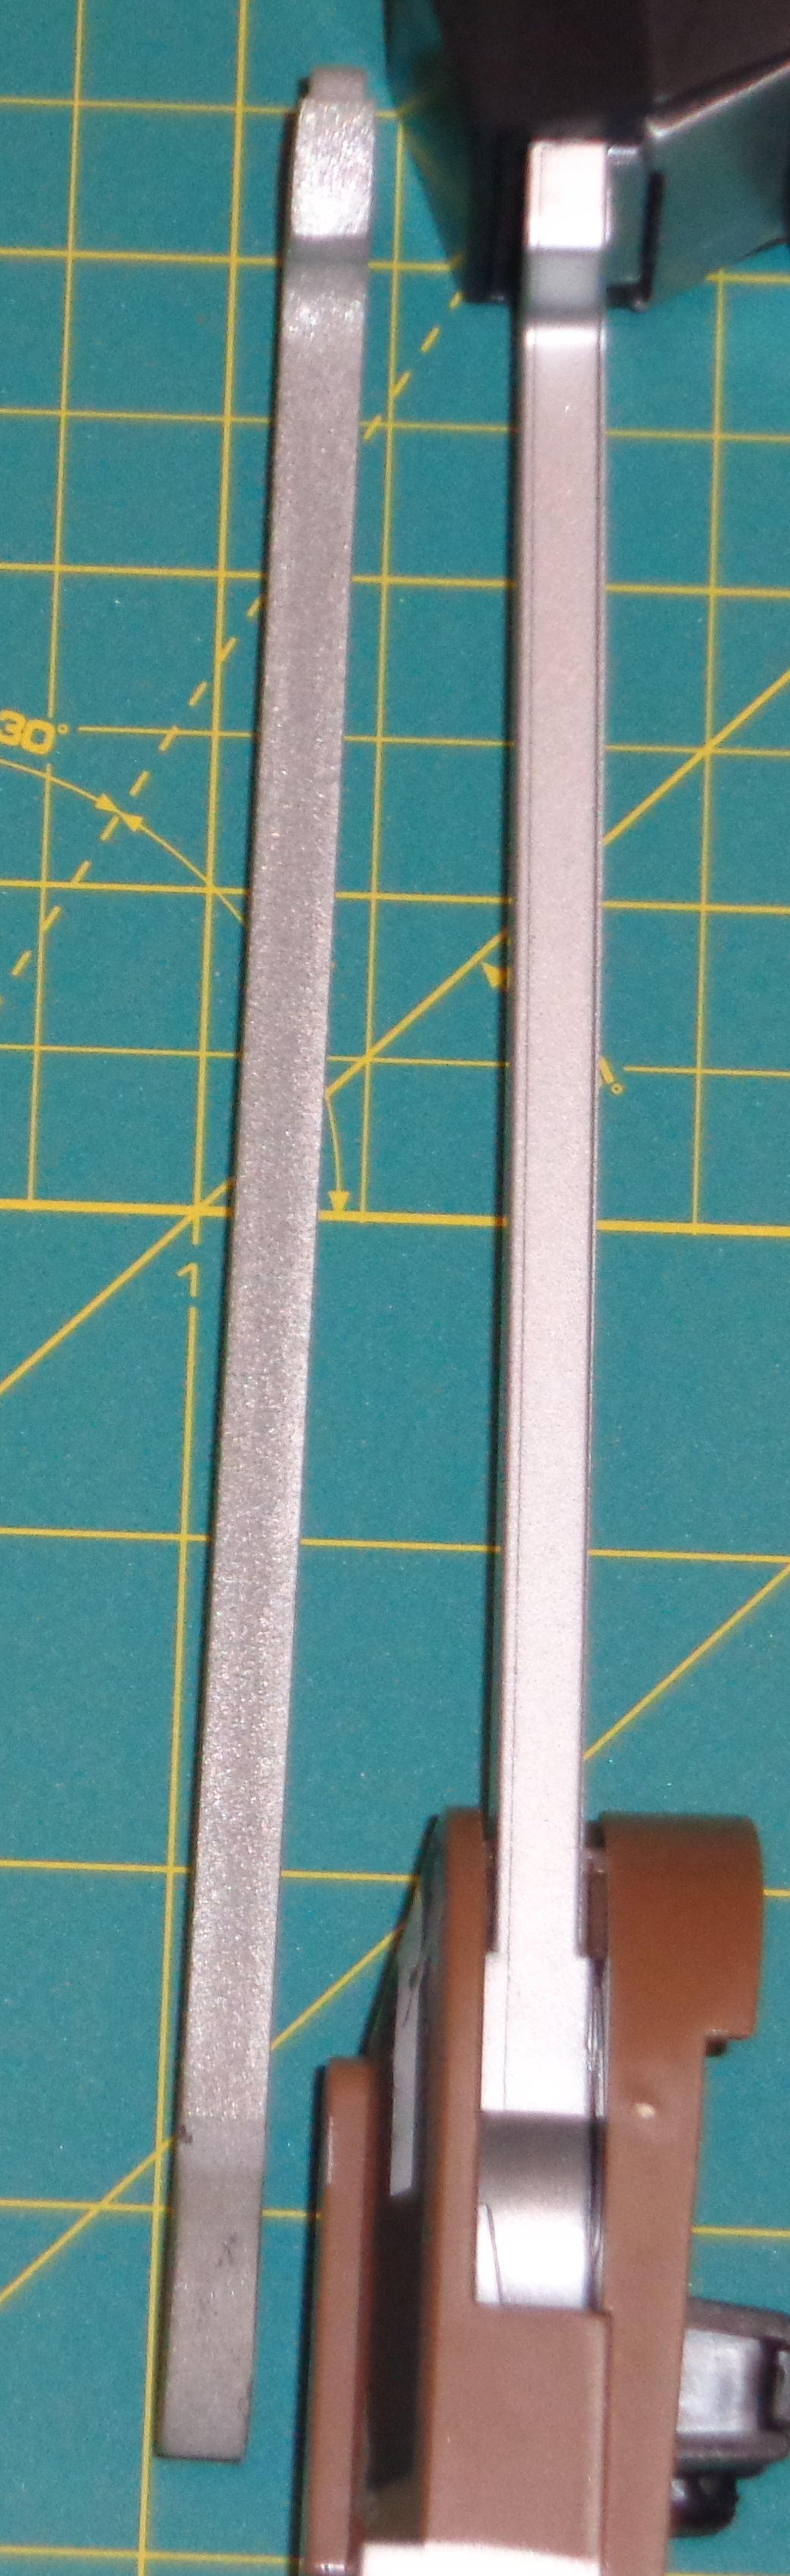 rangefinder stalk length comparison.JPG